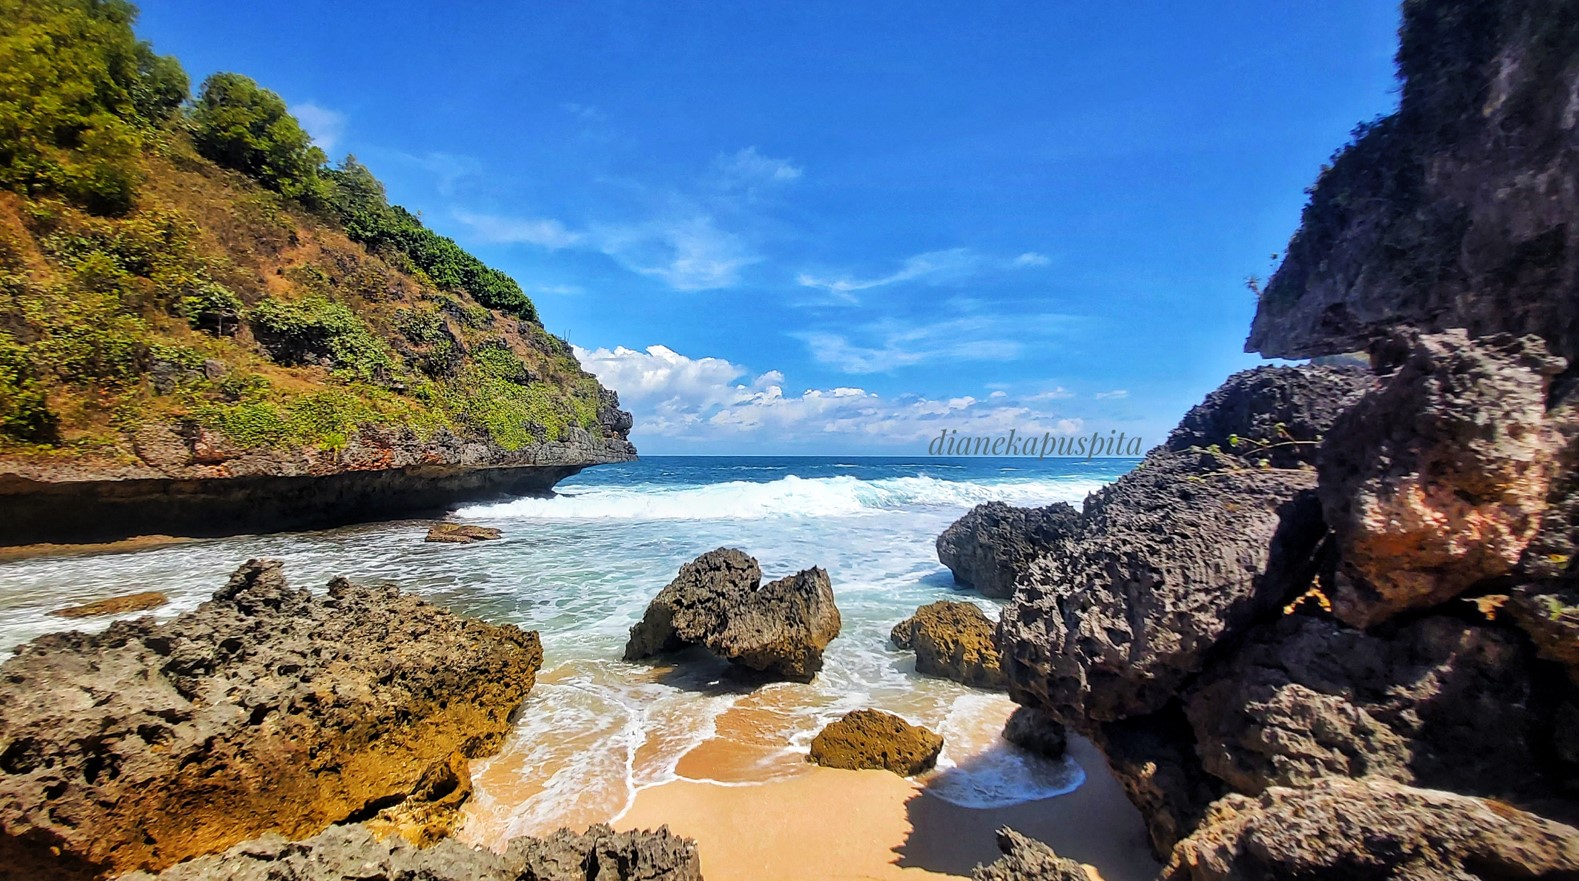 Pesona Keindahan Wisata Pantai Ngluen di Sapto Sari Gunung Kidul Yogyakarta (2)